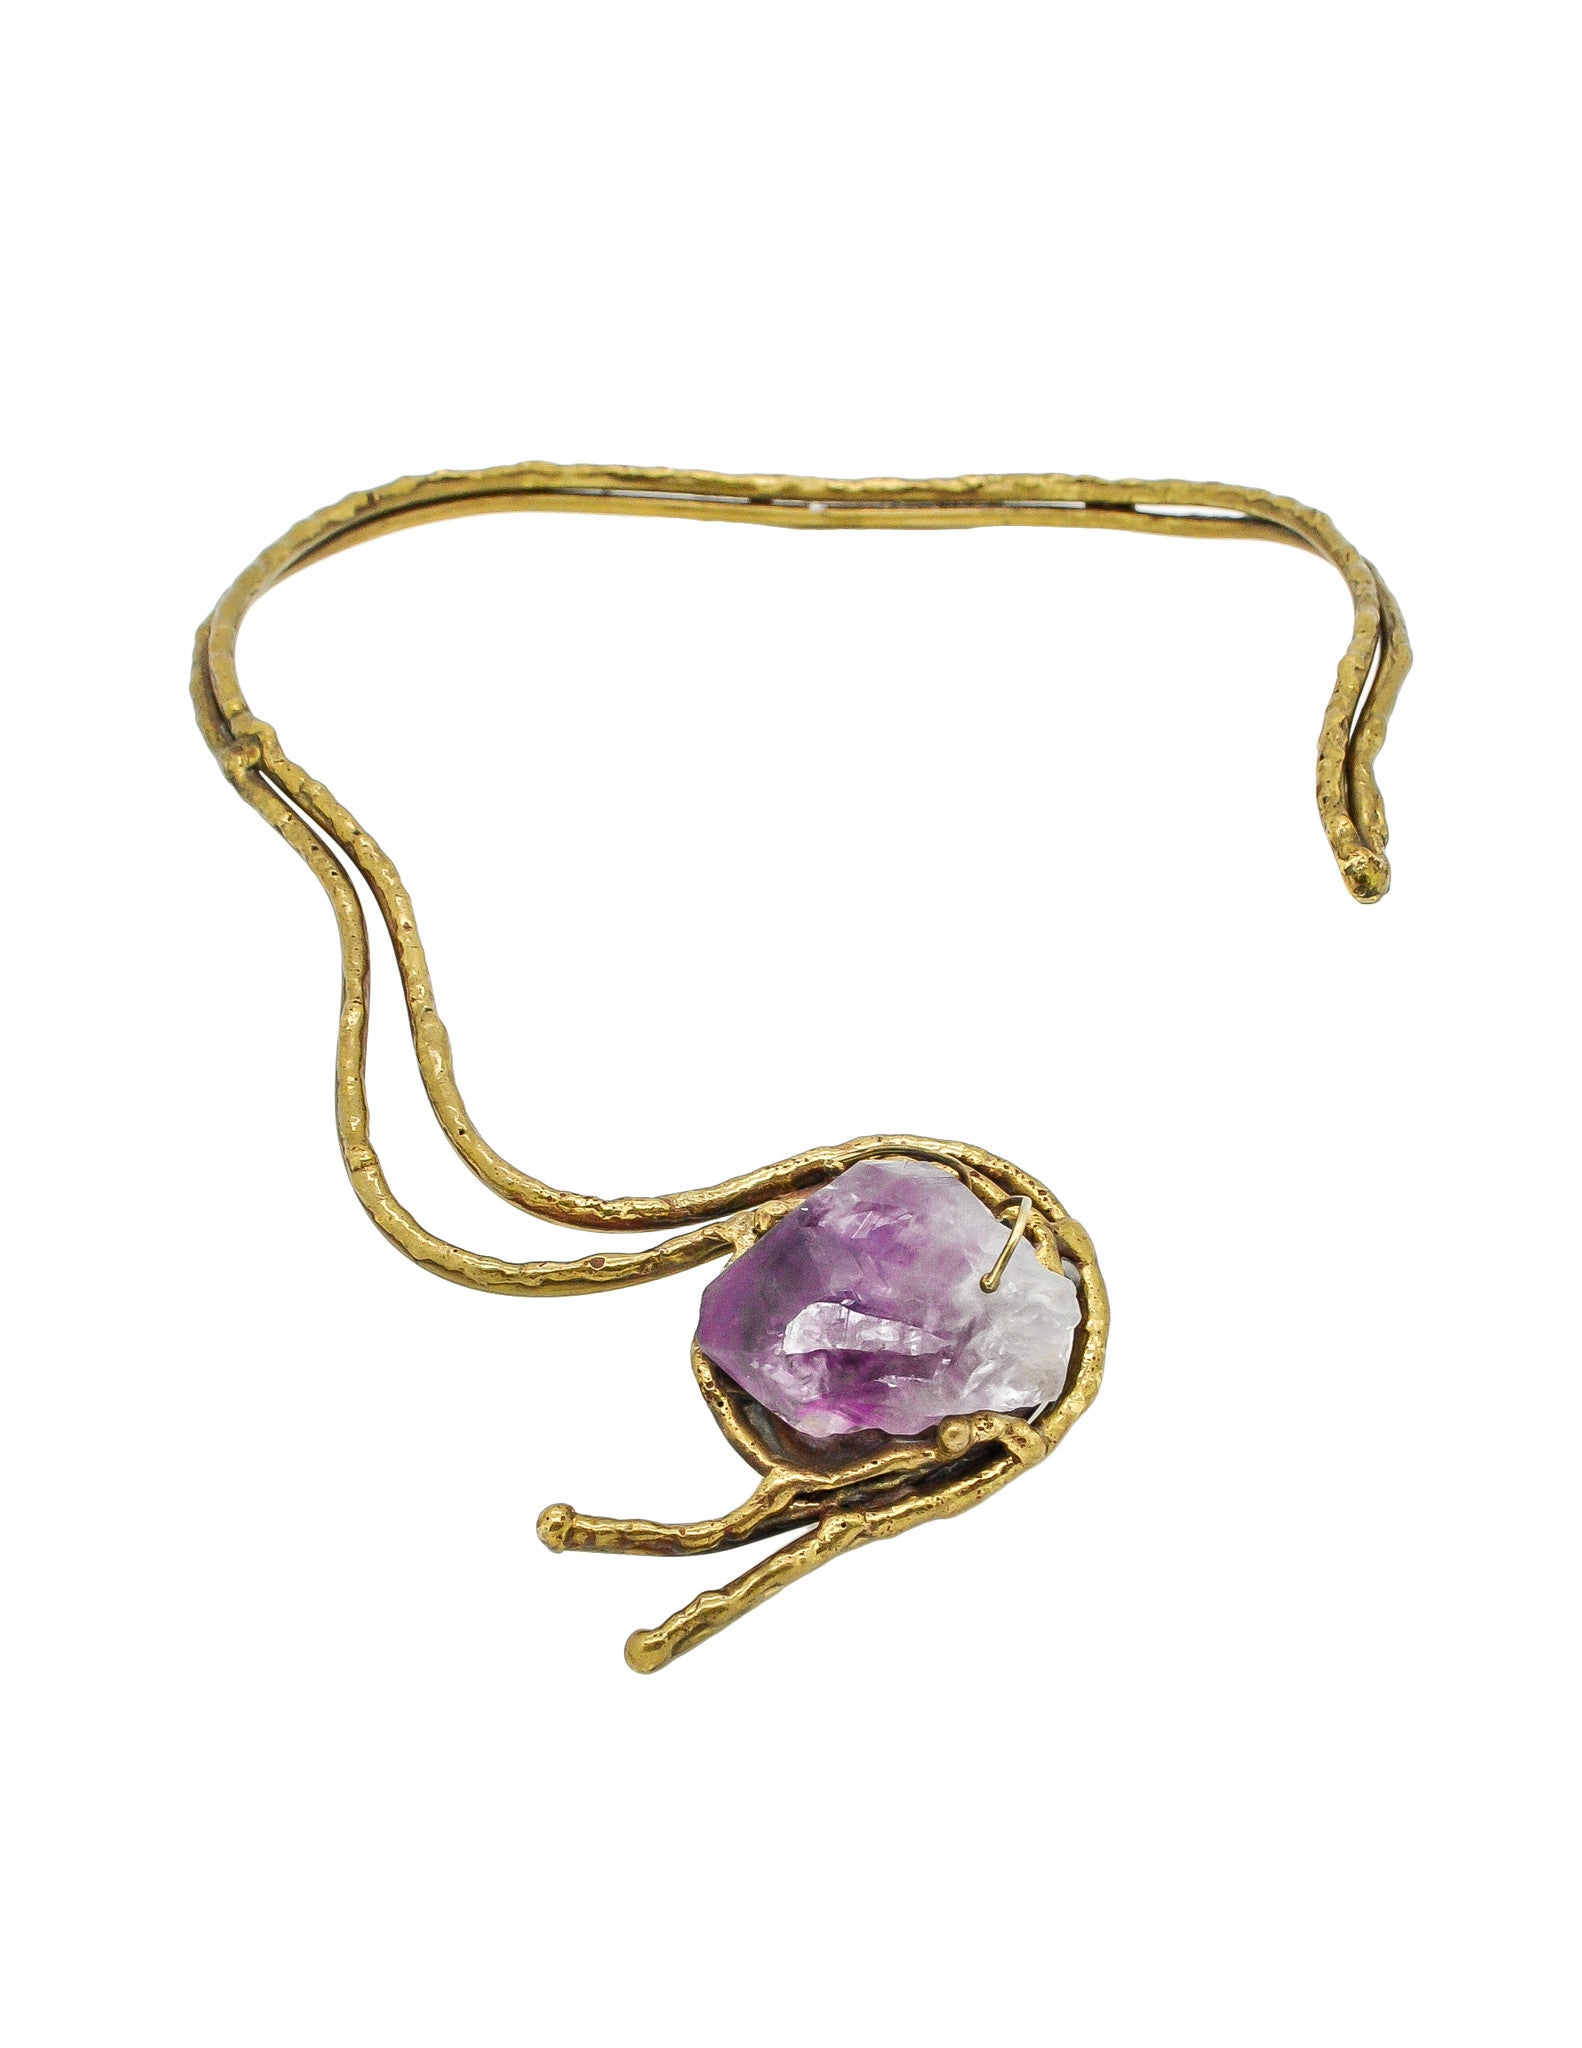 Vintage Amethyst Artisan Brass Metal Art Choker Necklace - Amarcord Vintage Fashion
 - 1